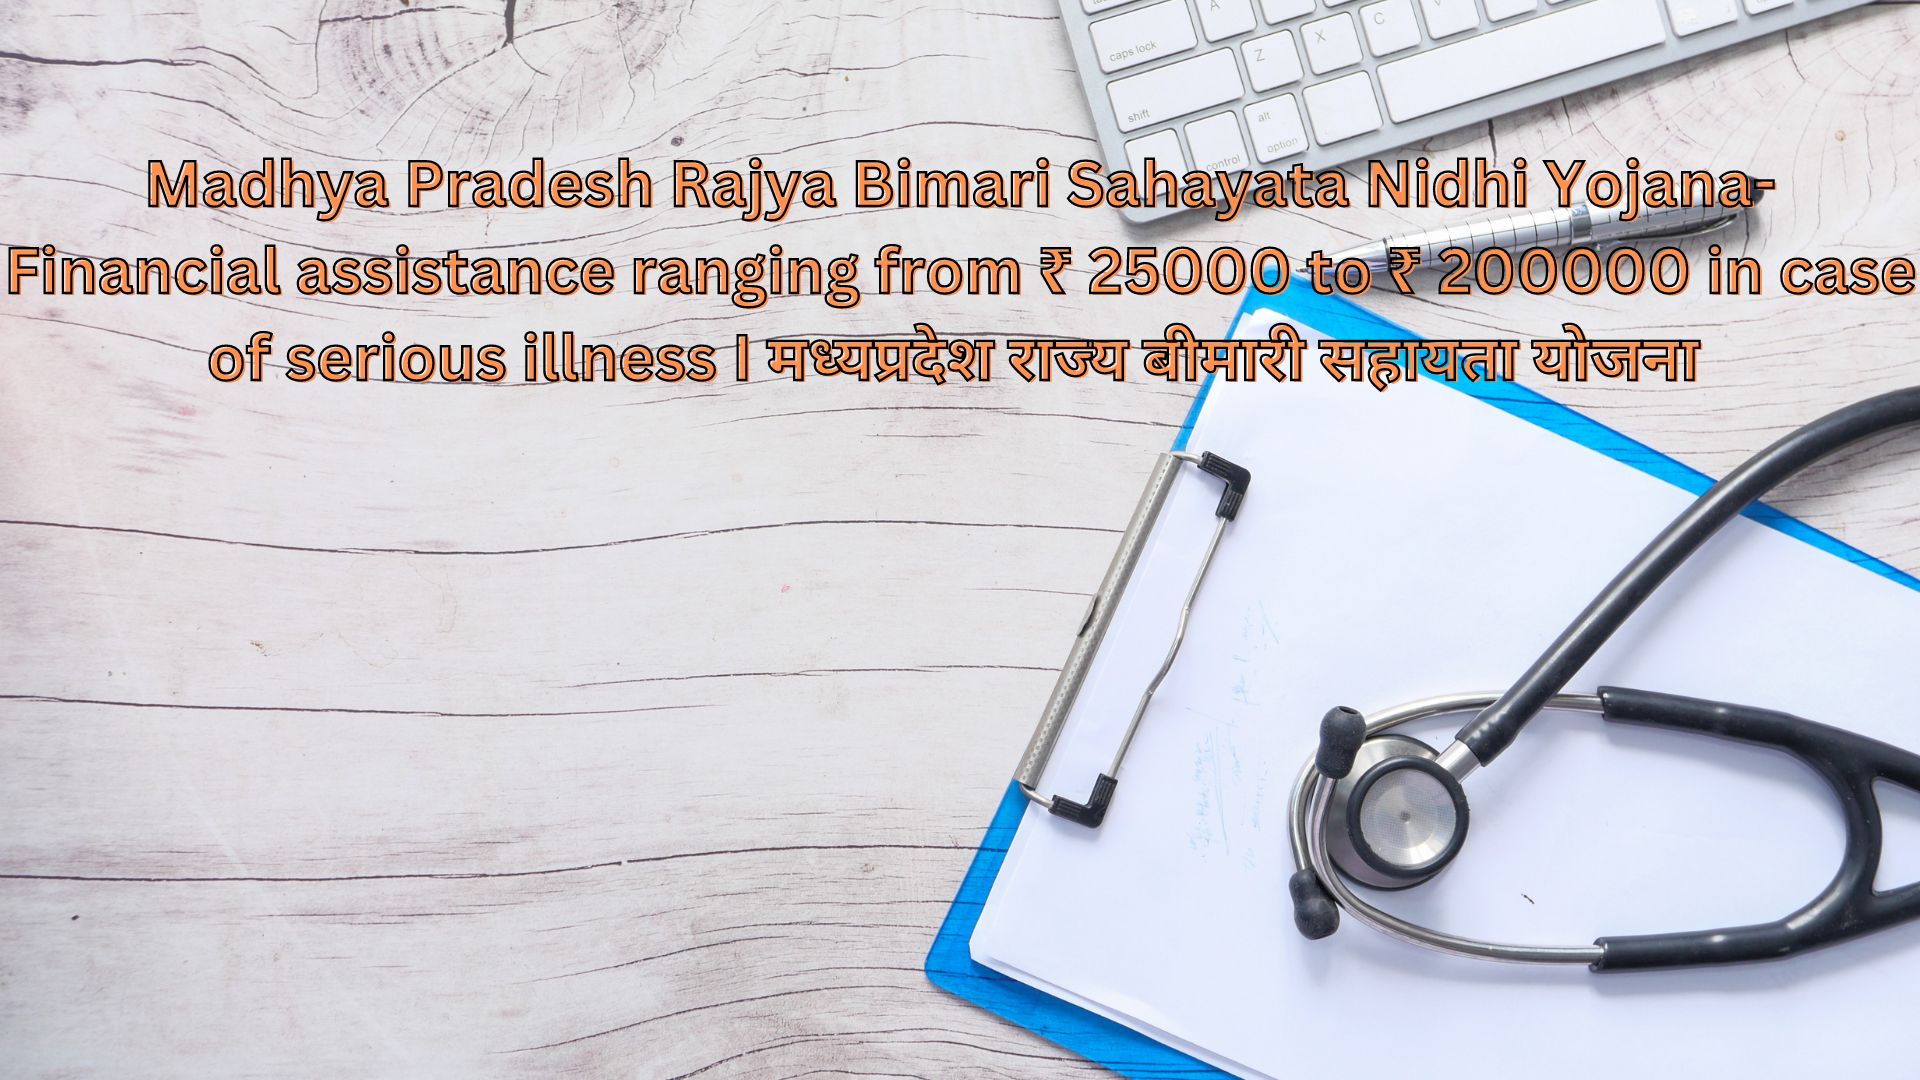 Madhya Pradesh Rajya Bimari Sahayata Nidhi Yojana- Financial assistance ranging from ₹ 25000 to ₹ 200000 in case of serious illness I मध्यप्रदेश राज्य बीमारी सहायता योजना